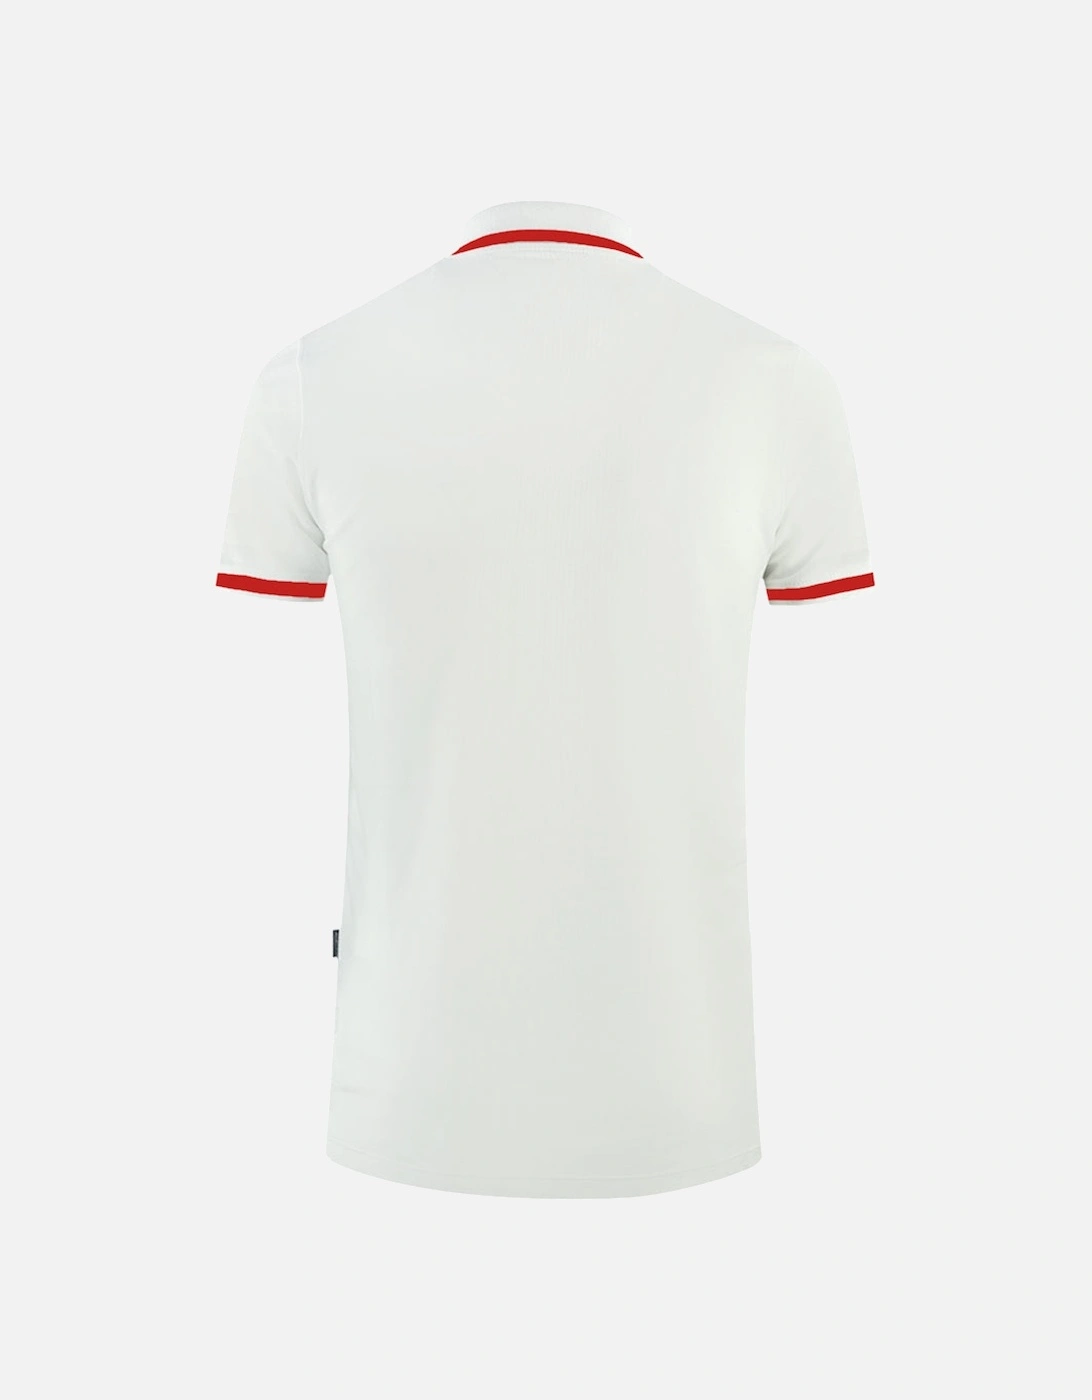 London Union Jack White Polo Shirt